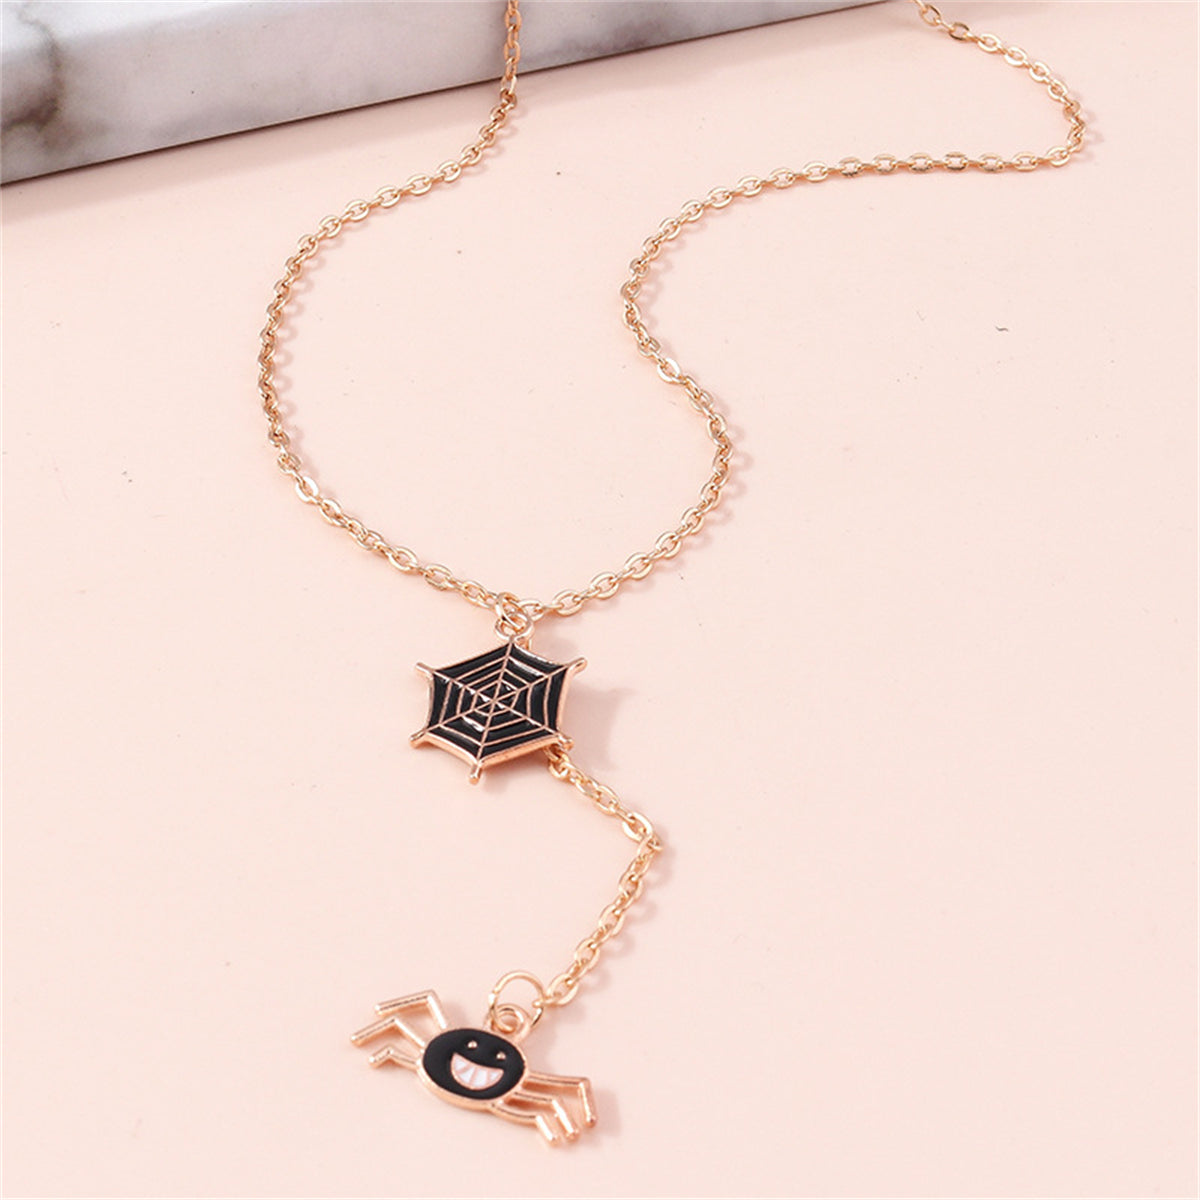 18K Gold-Plated & Black Enamel Spiderweb Pendant Necklace